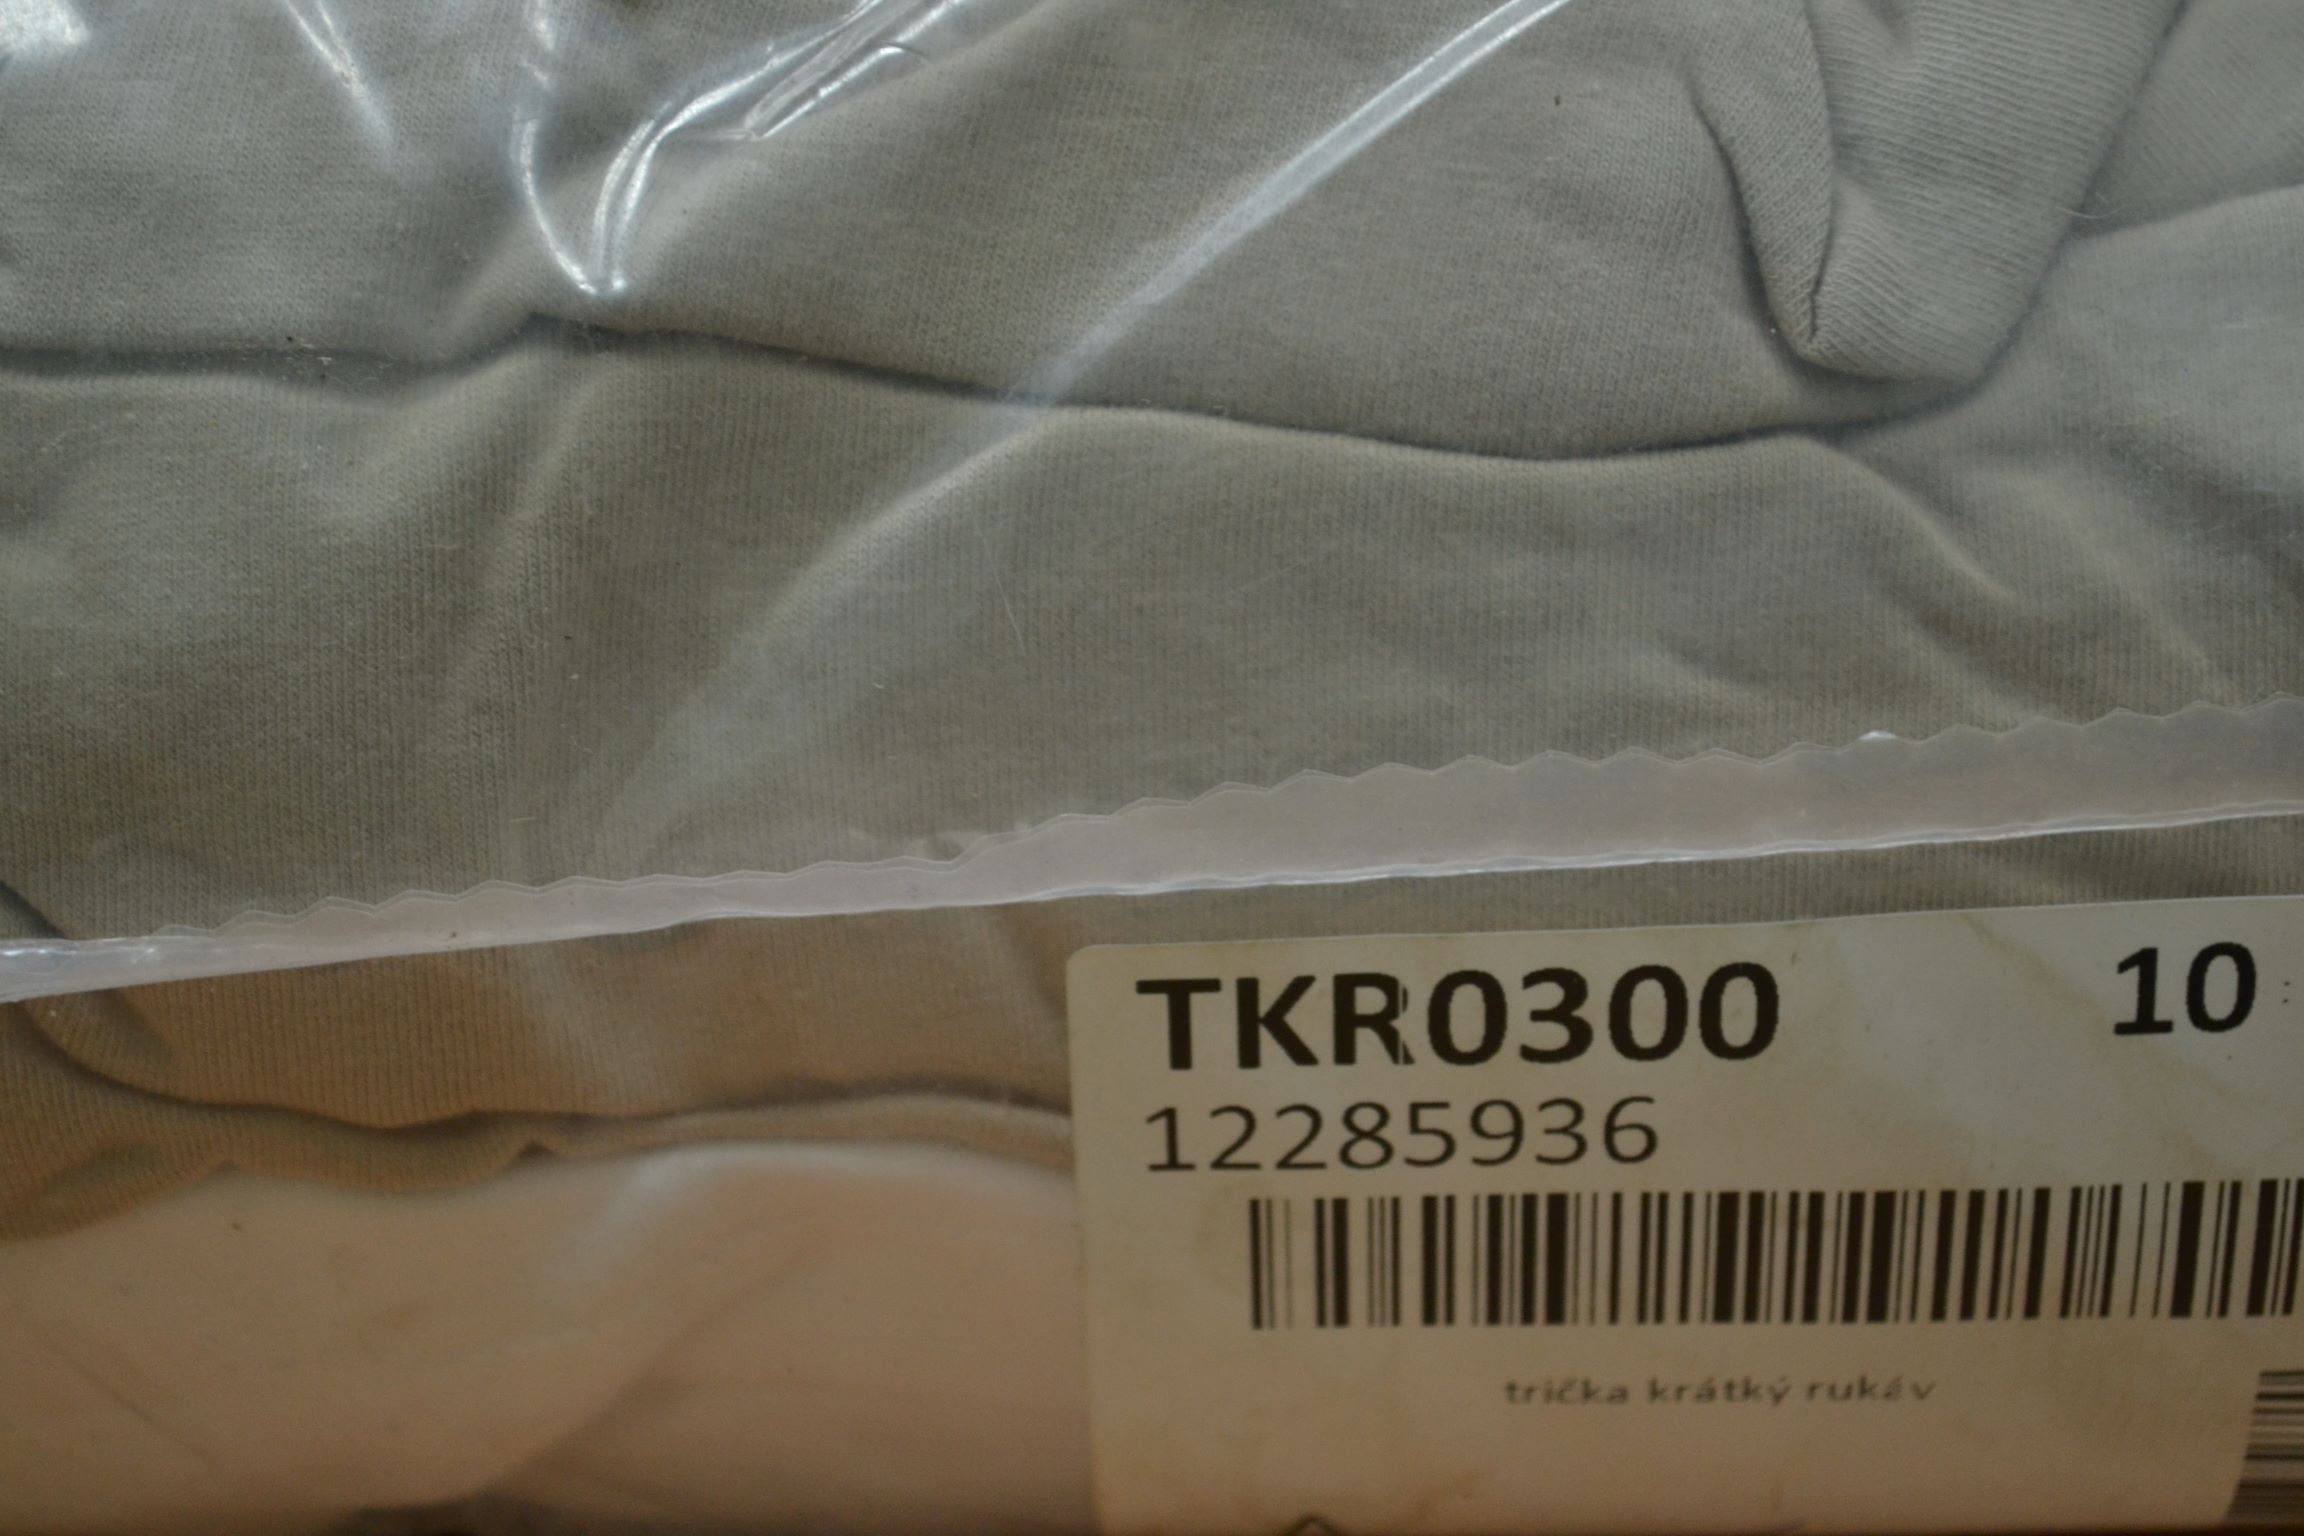 TKR0300 Майки с коротким рукавом; код мешка 12285936